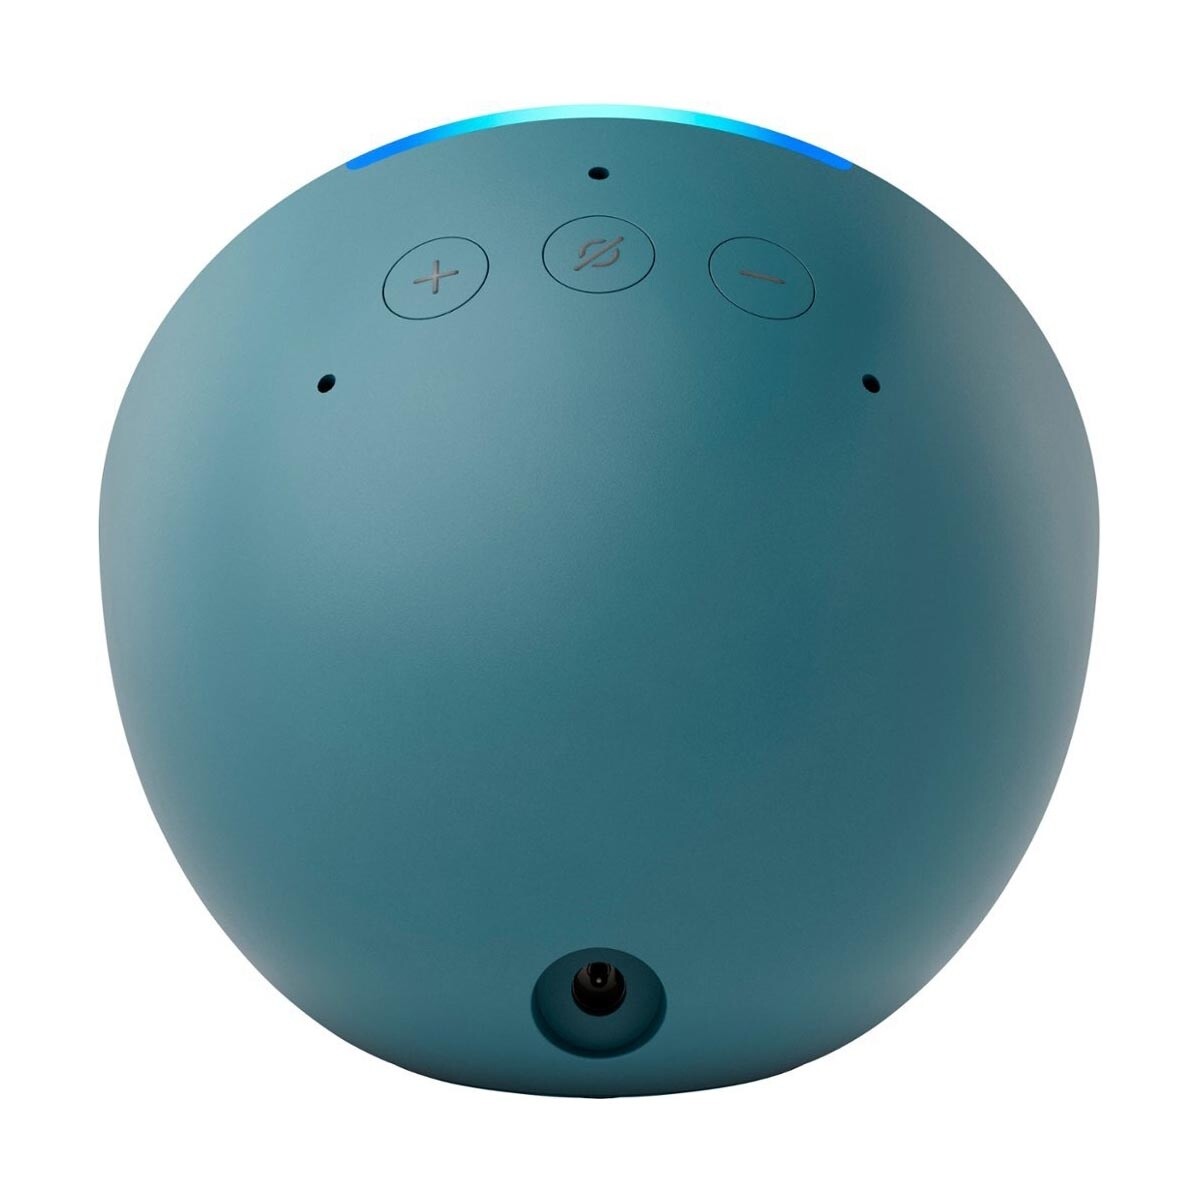 Parlante Smart Amazon Echo Pop (1st Gen) C/ Asistente Virtual Alexa Midnight teal